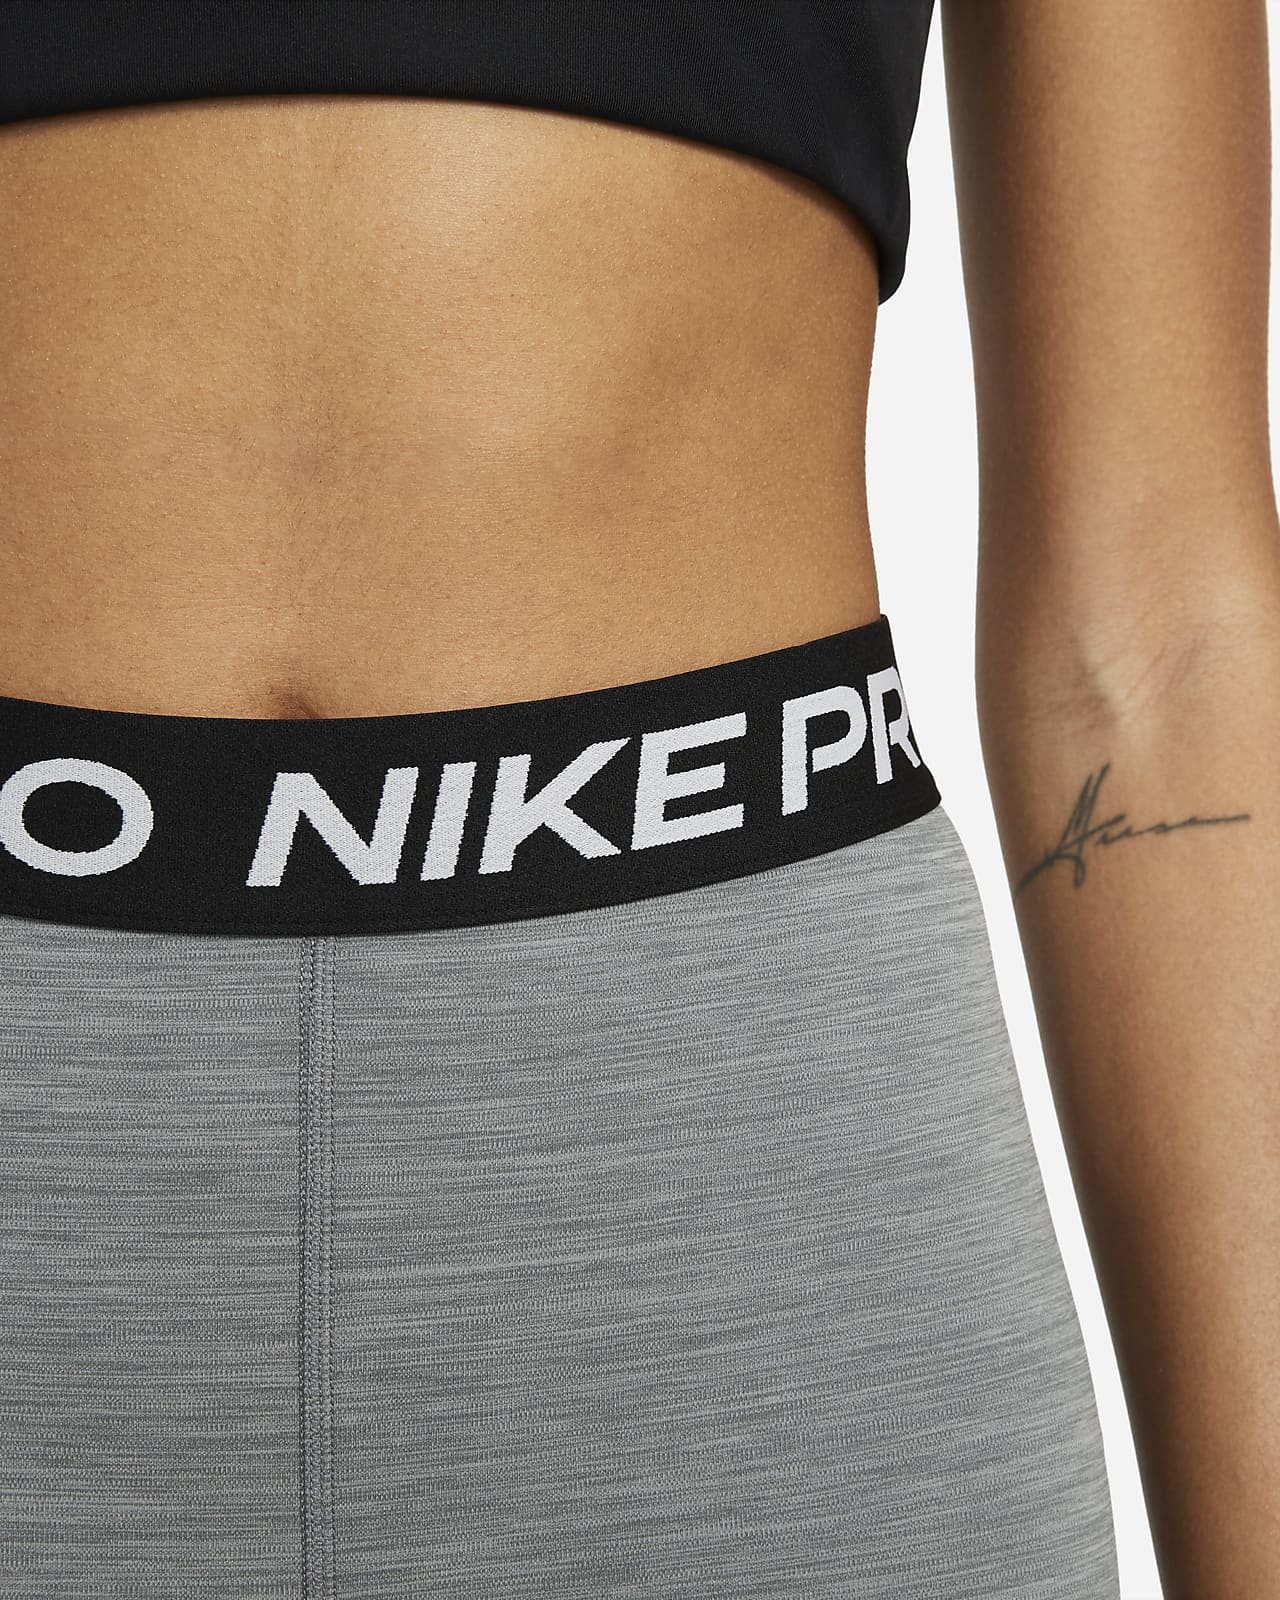 Nike Yoga Women's High-Waisted 18cm (approx.) Shorts. Nike LU